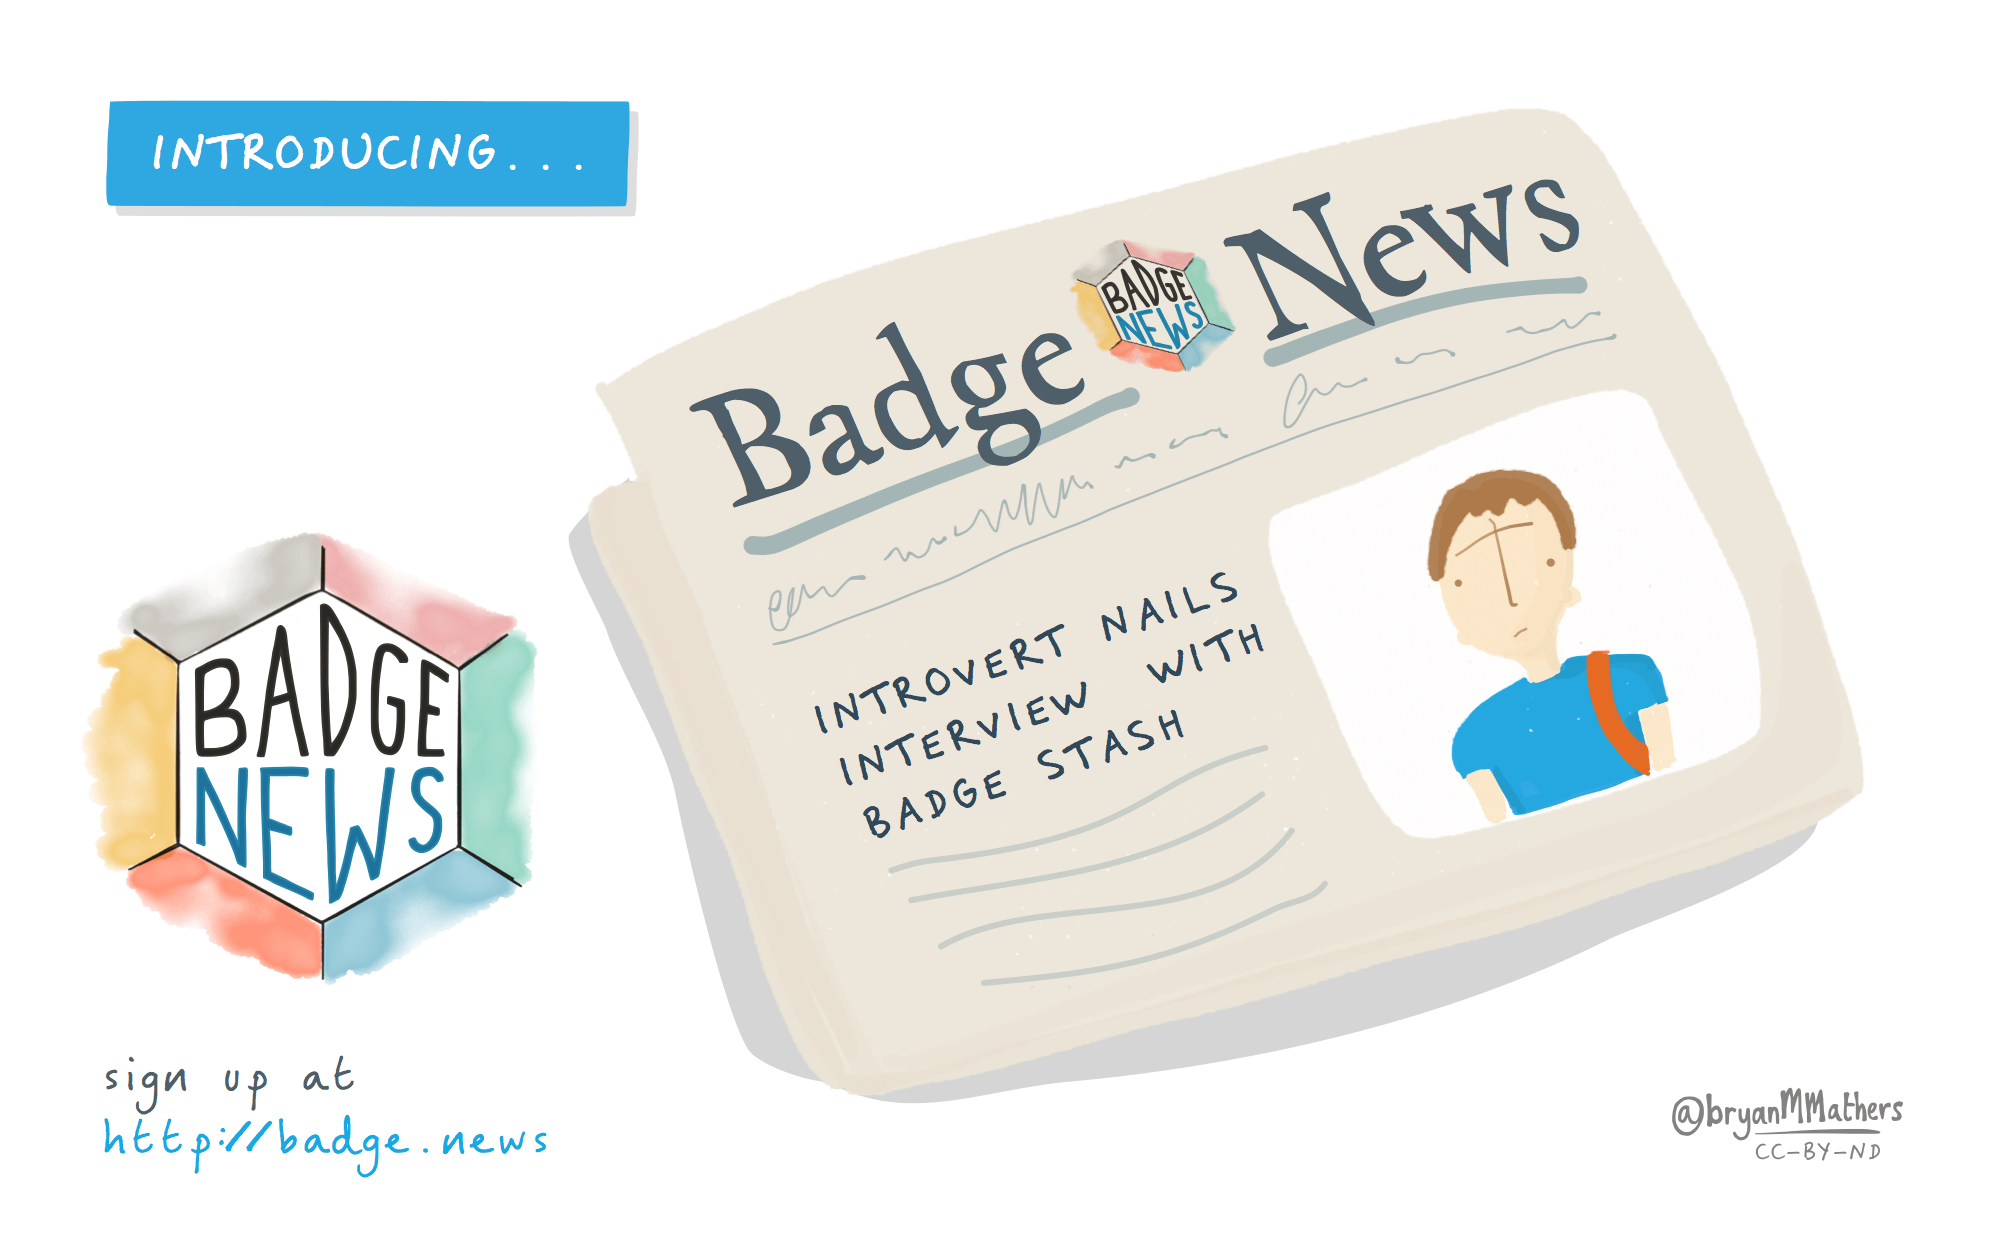 Introducing Badge News